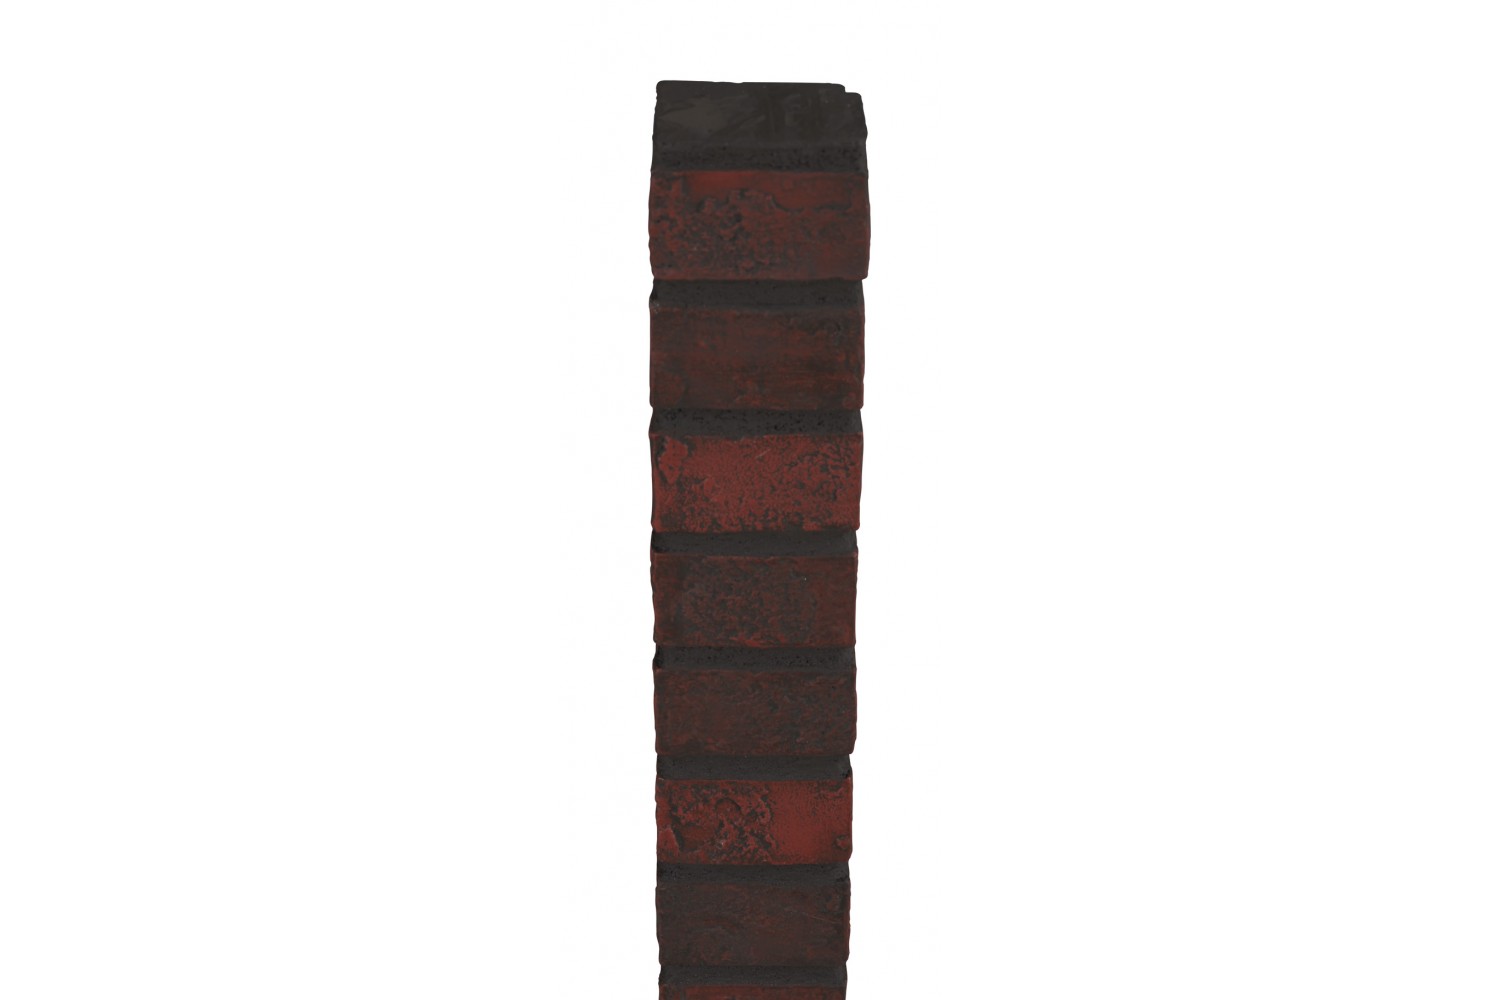 Rustic Brick Ledger - Dark Red Dark Grout